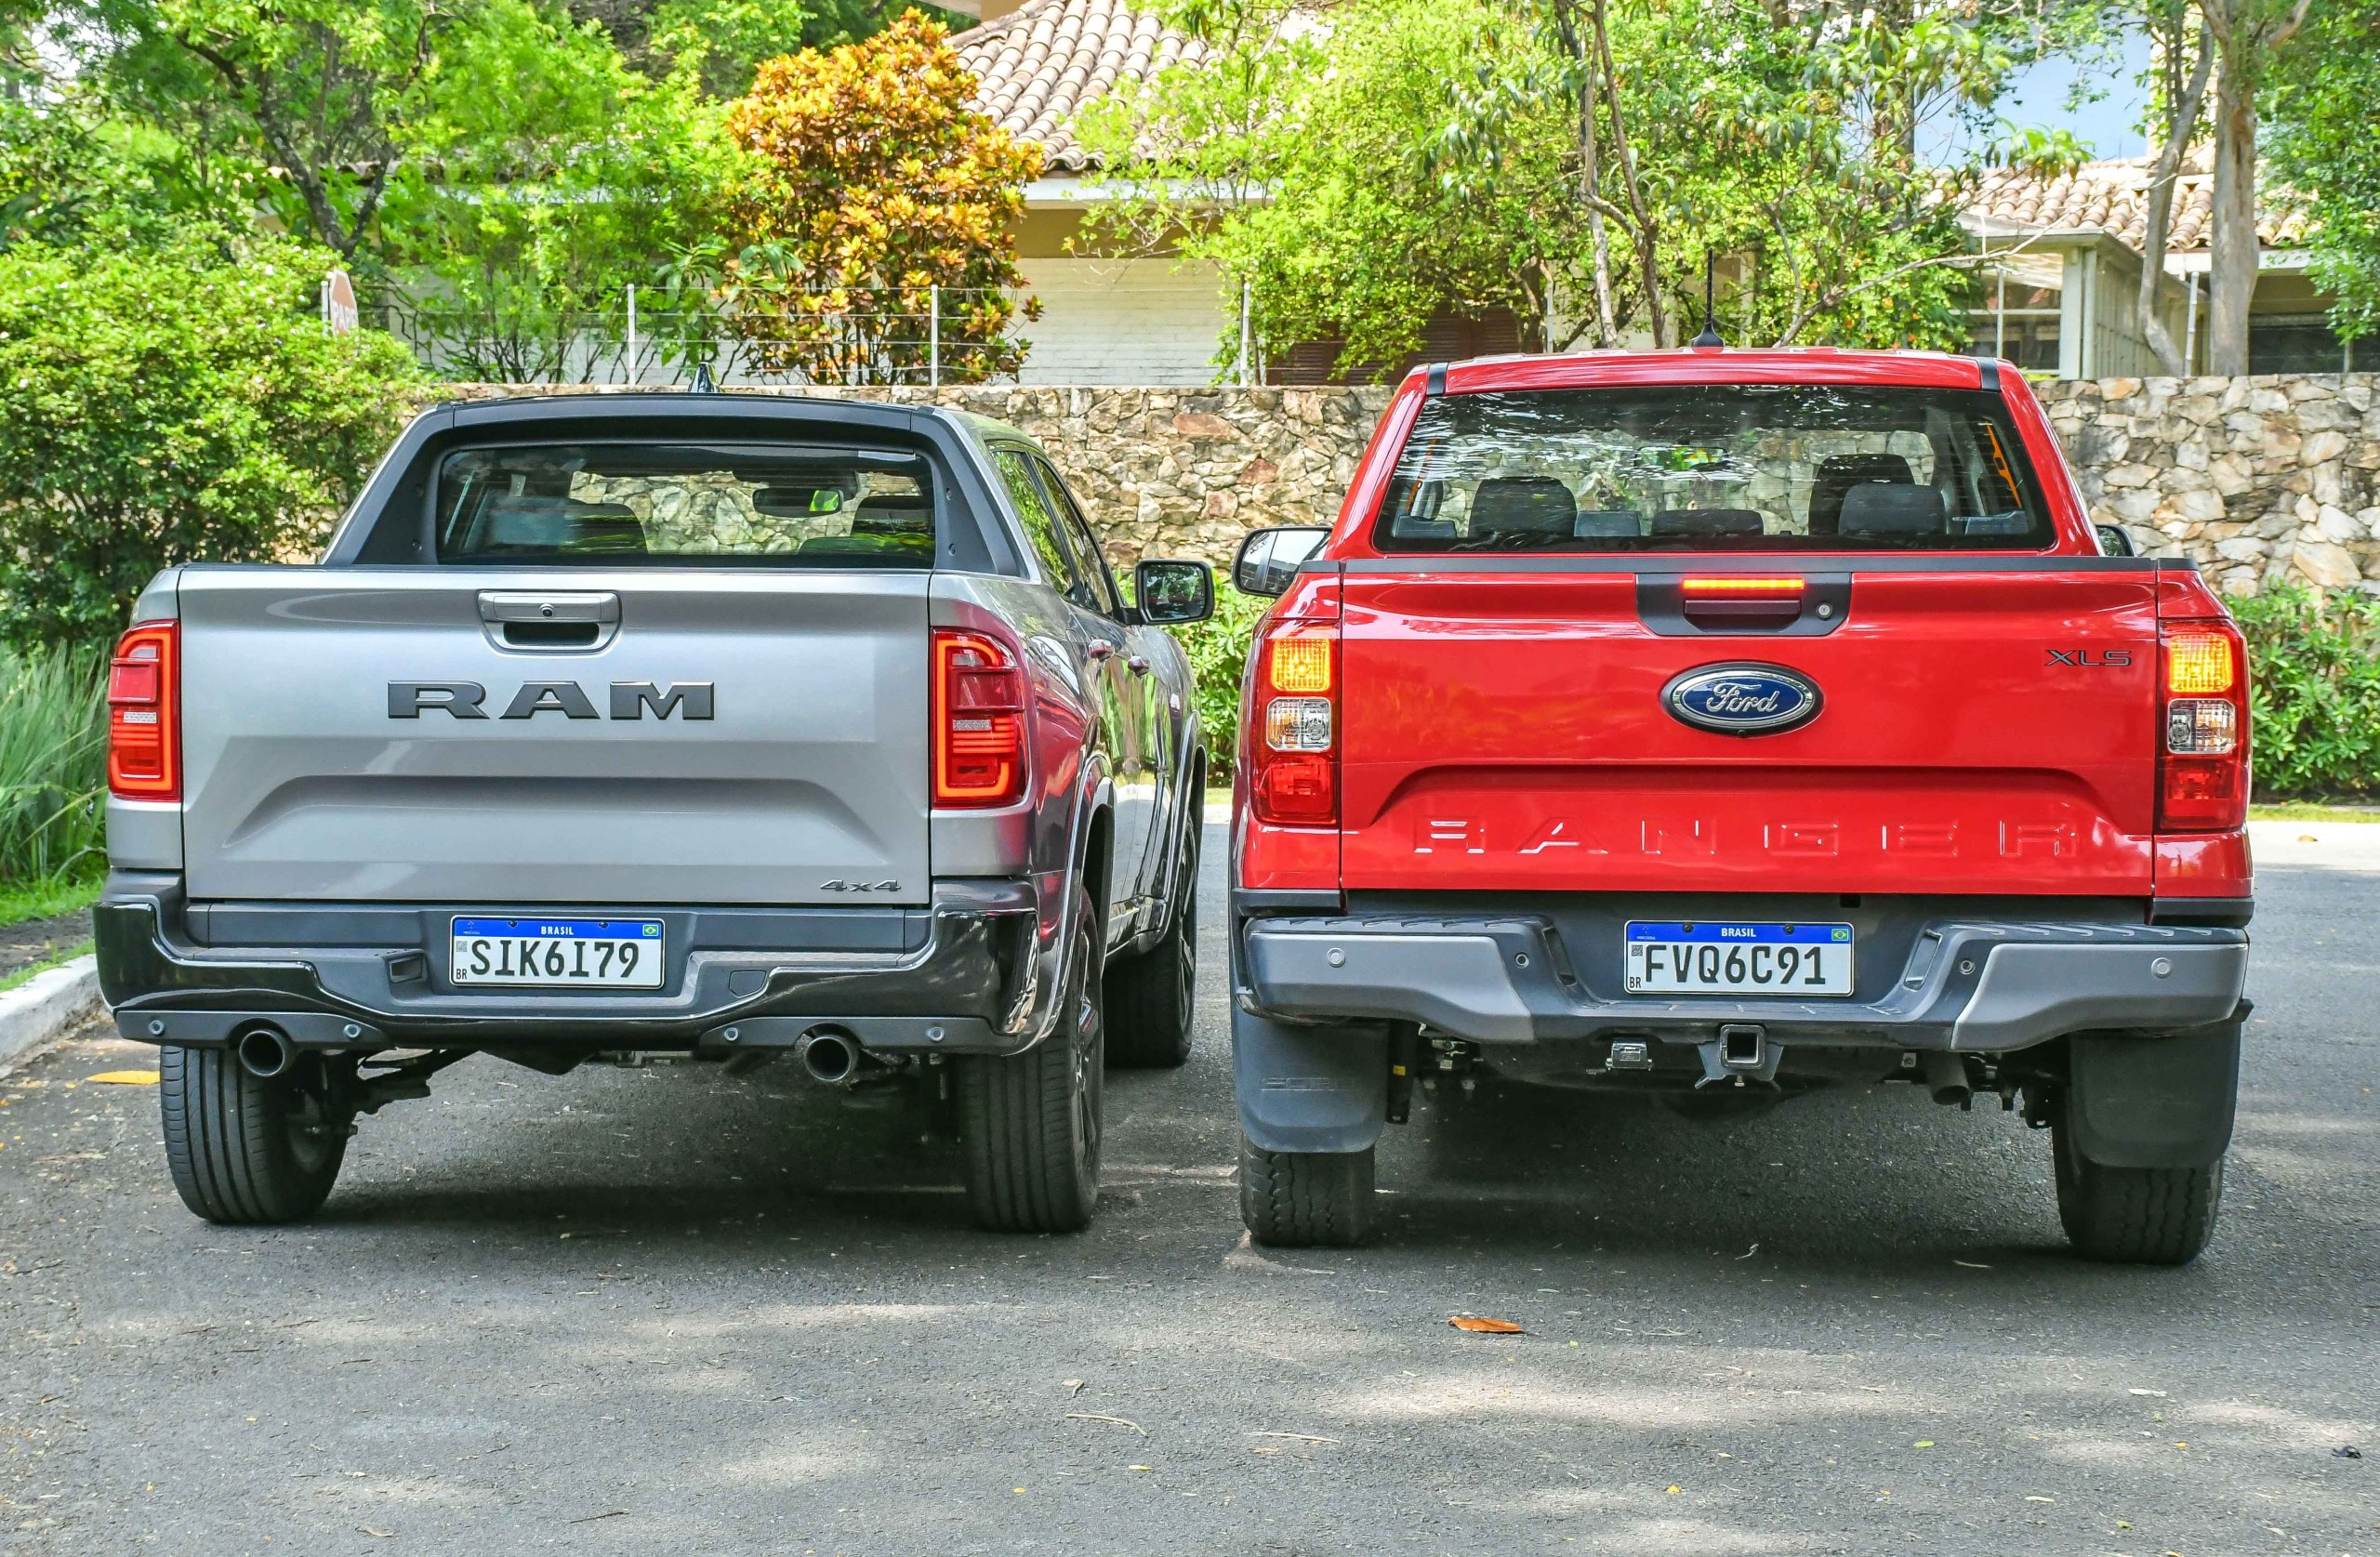 Ram Rampage R/T vs Ford Ranger XLS